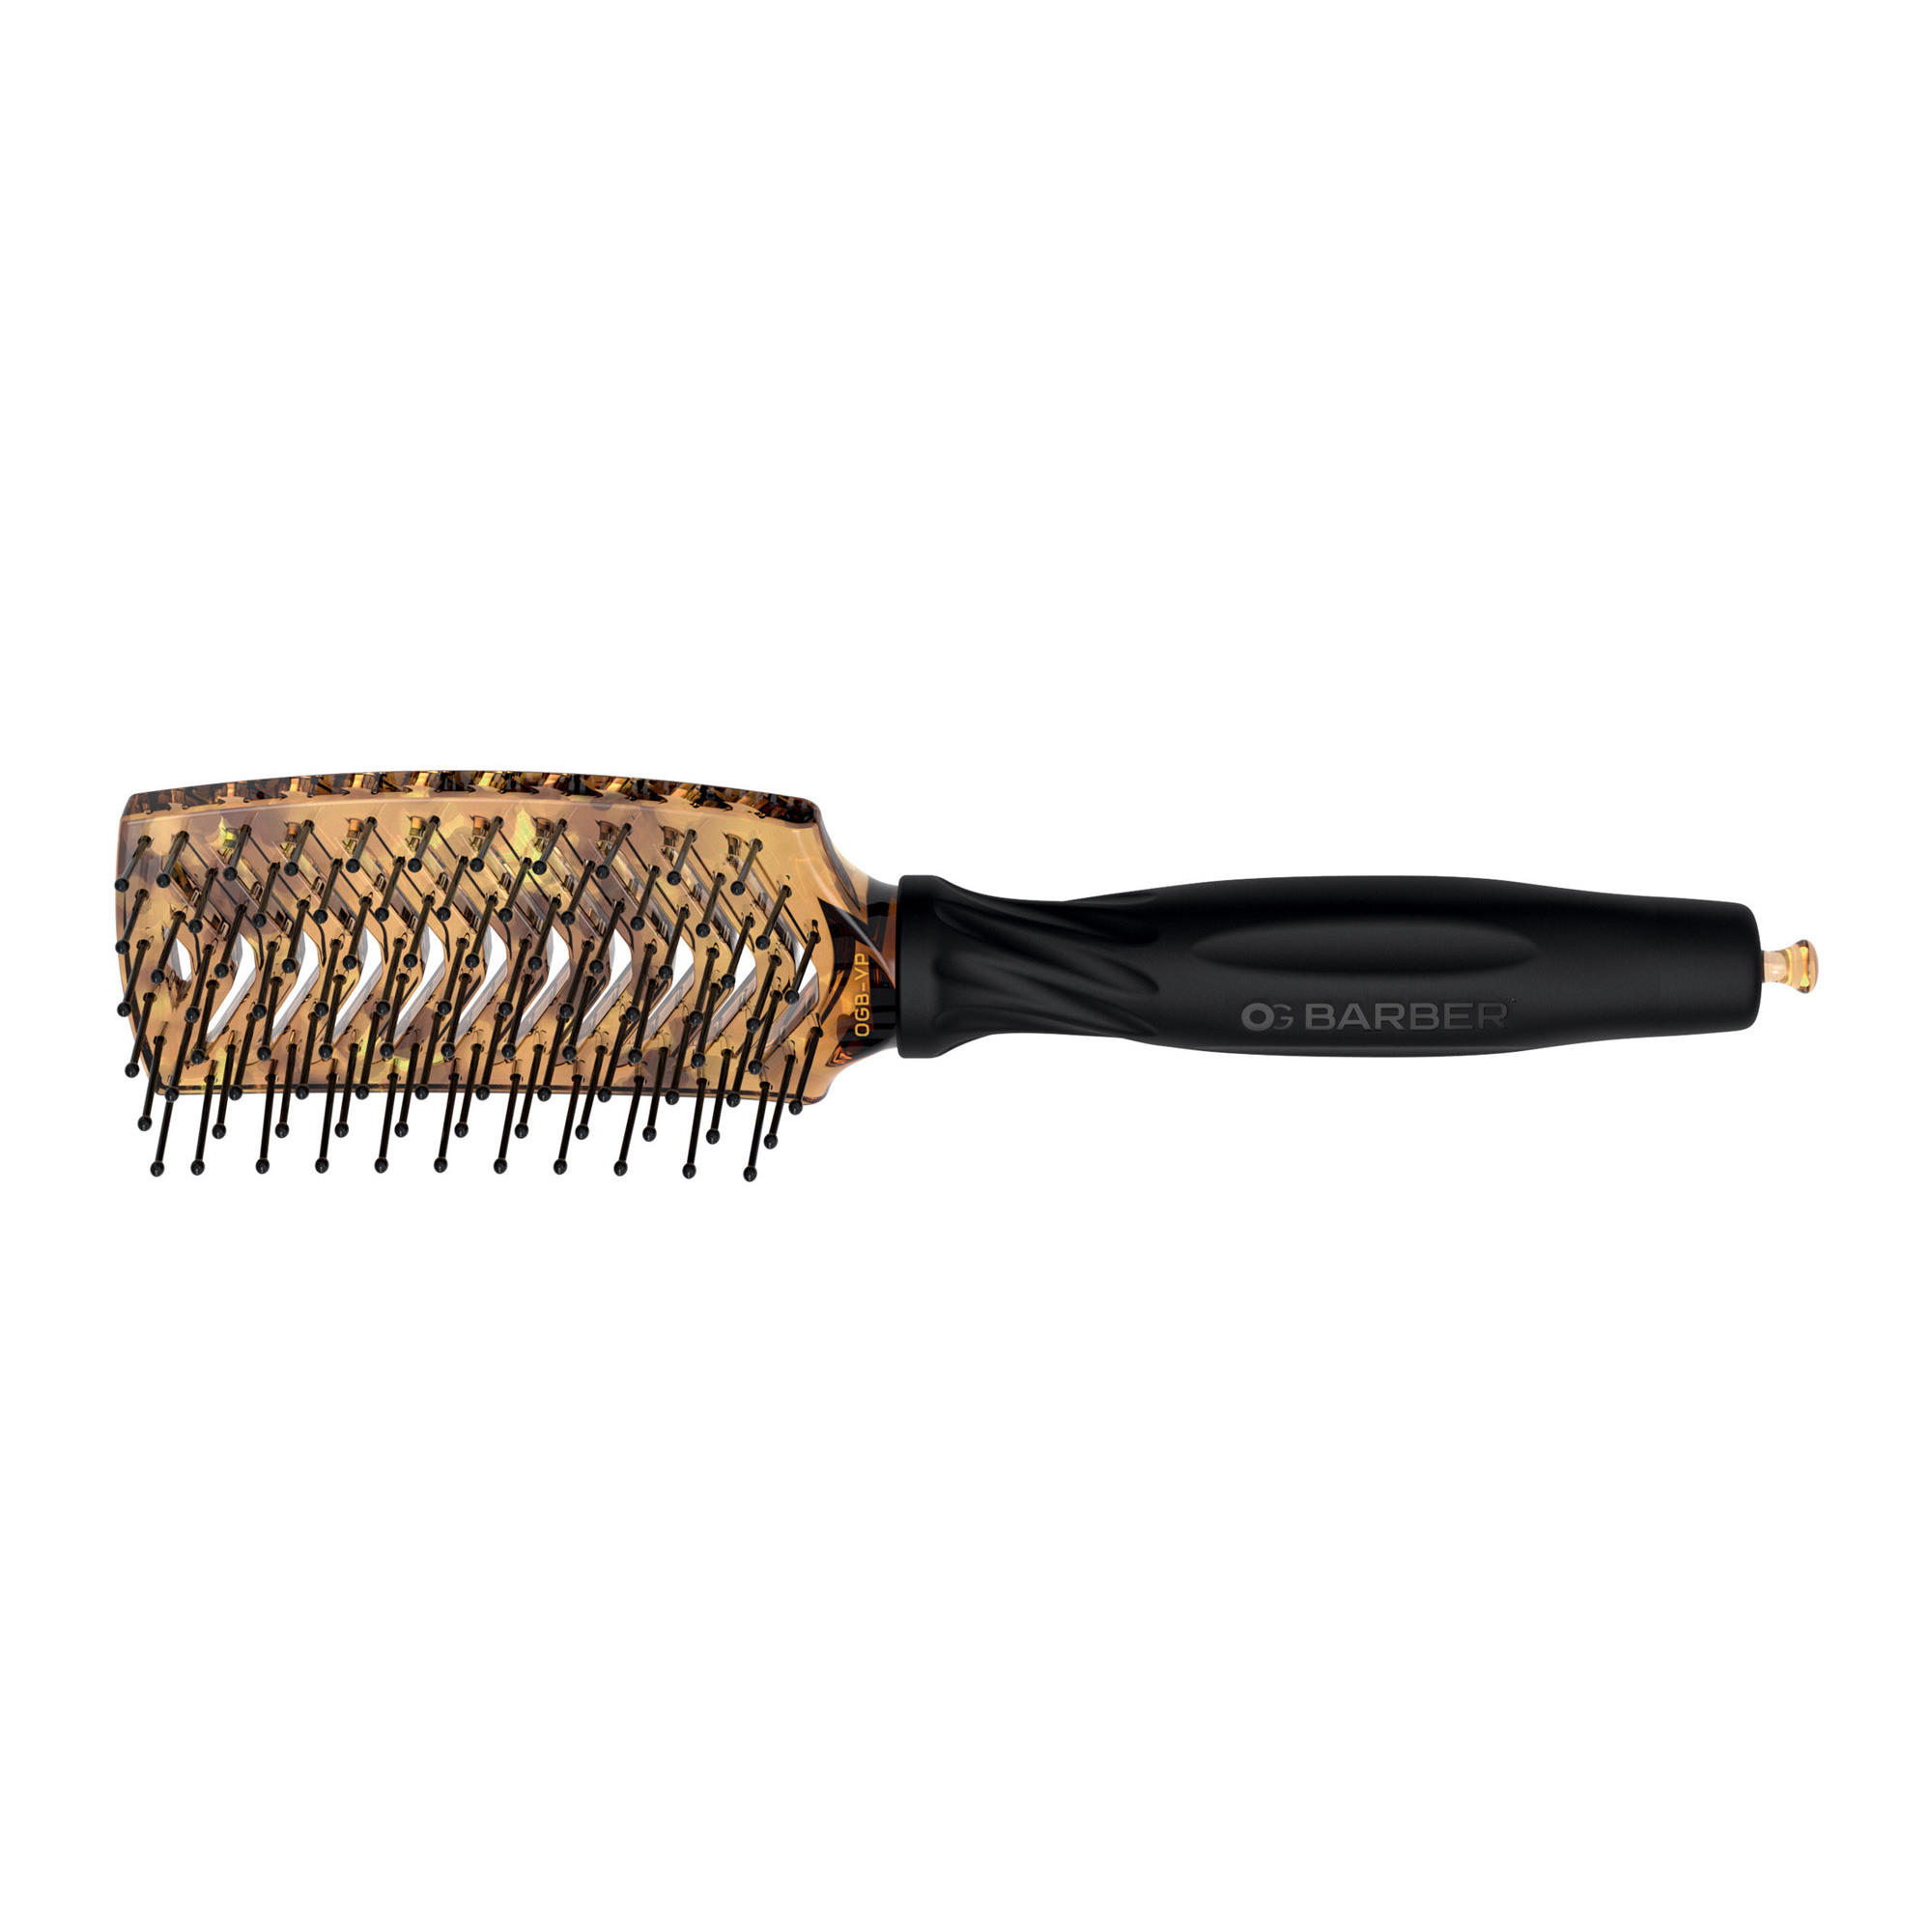 Olivia Garden OG Barber Vented Paddle Brush